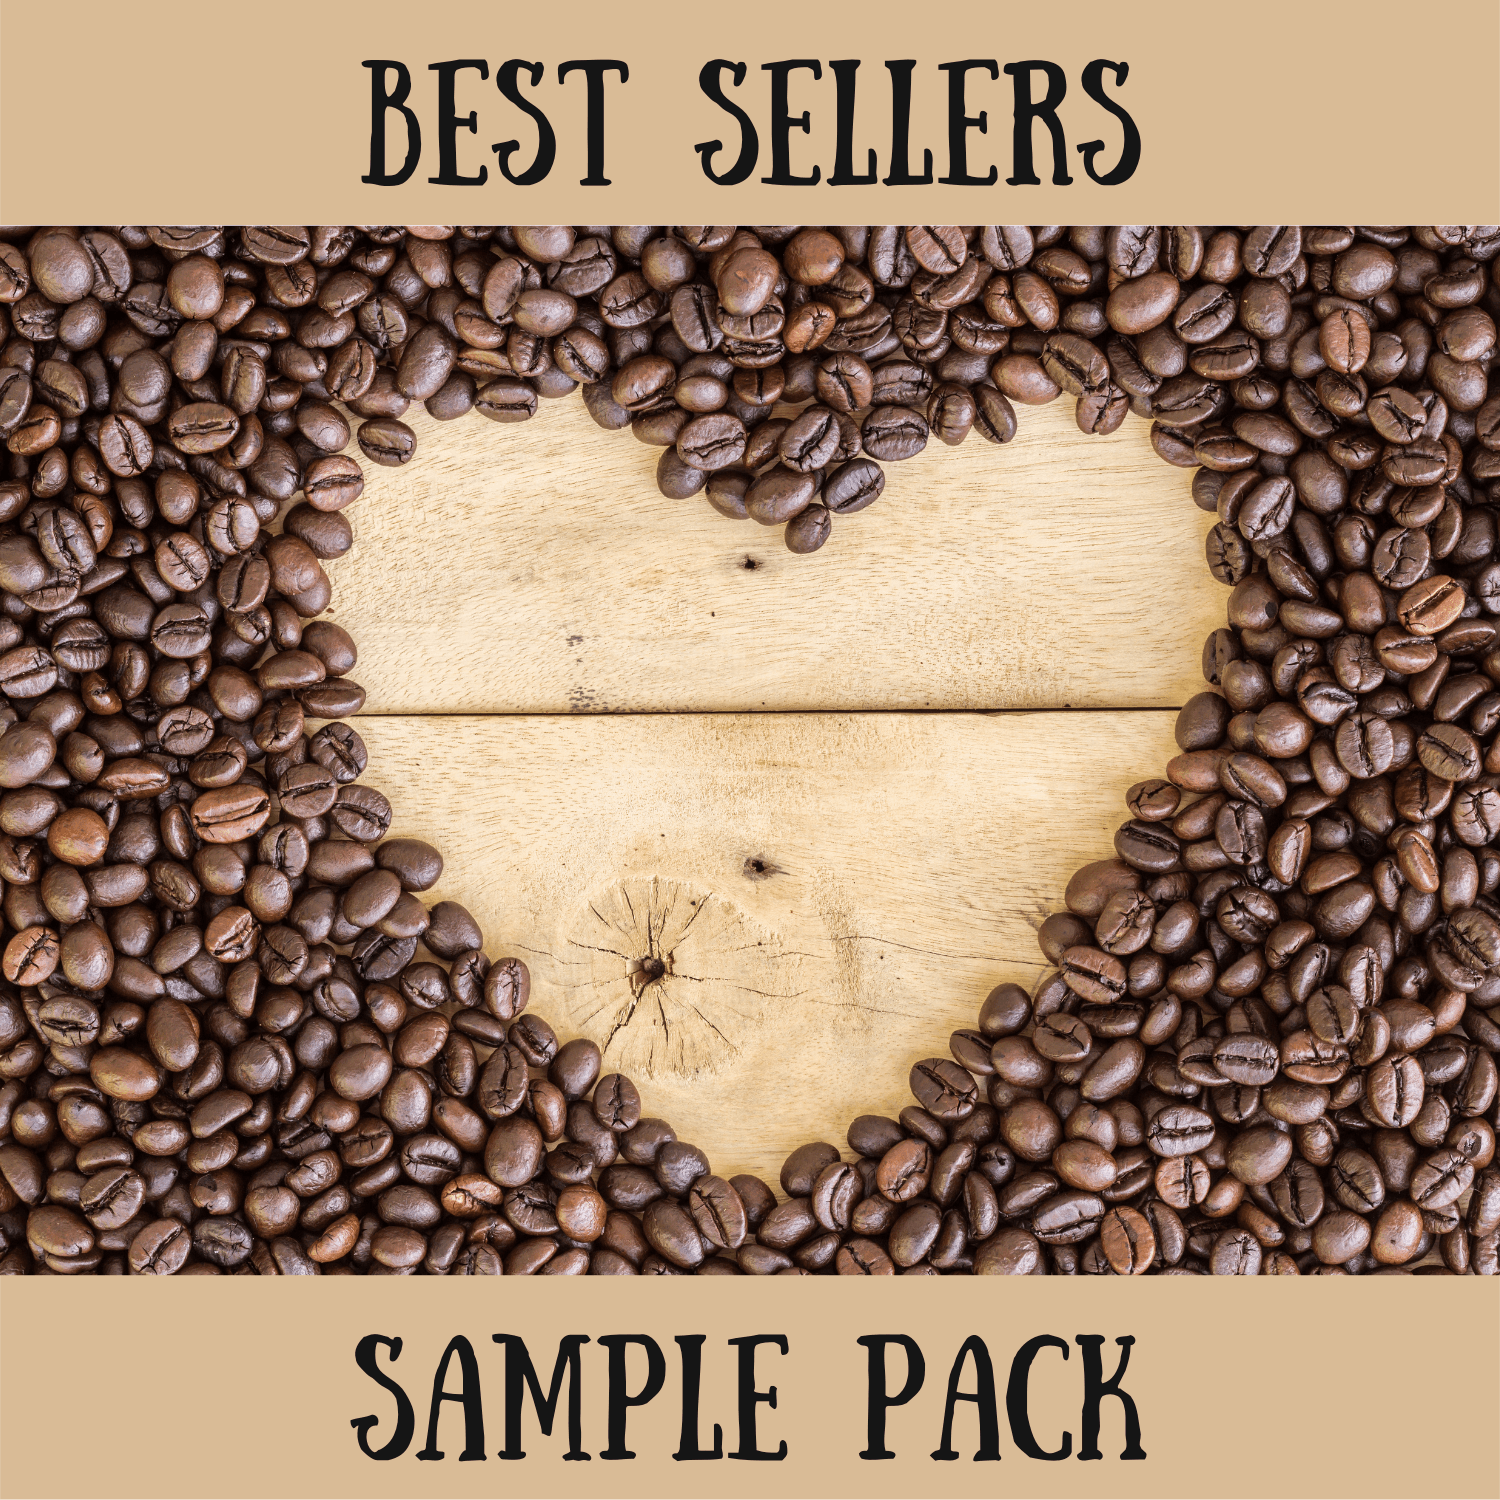 Best Sellers Sample Pack - Levata Caffè